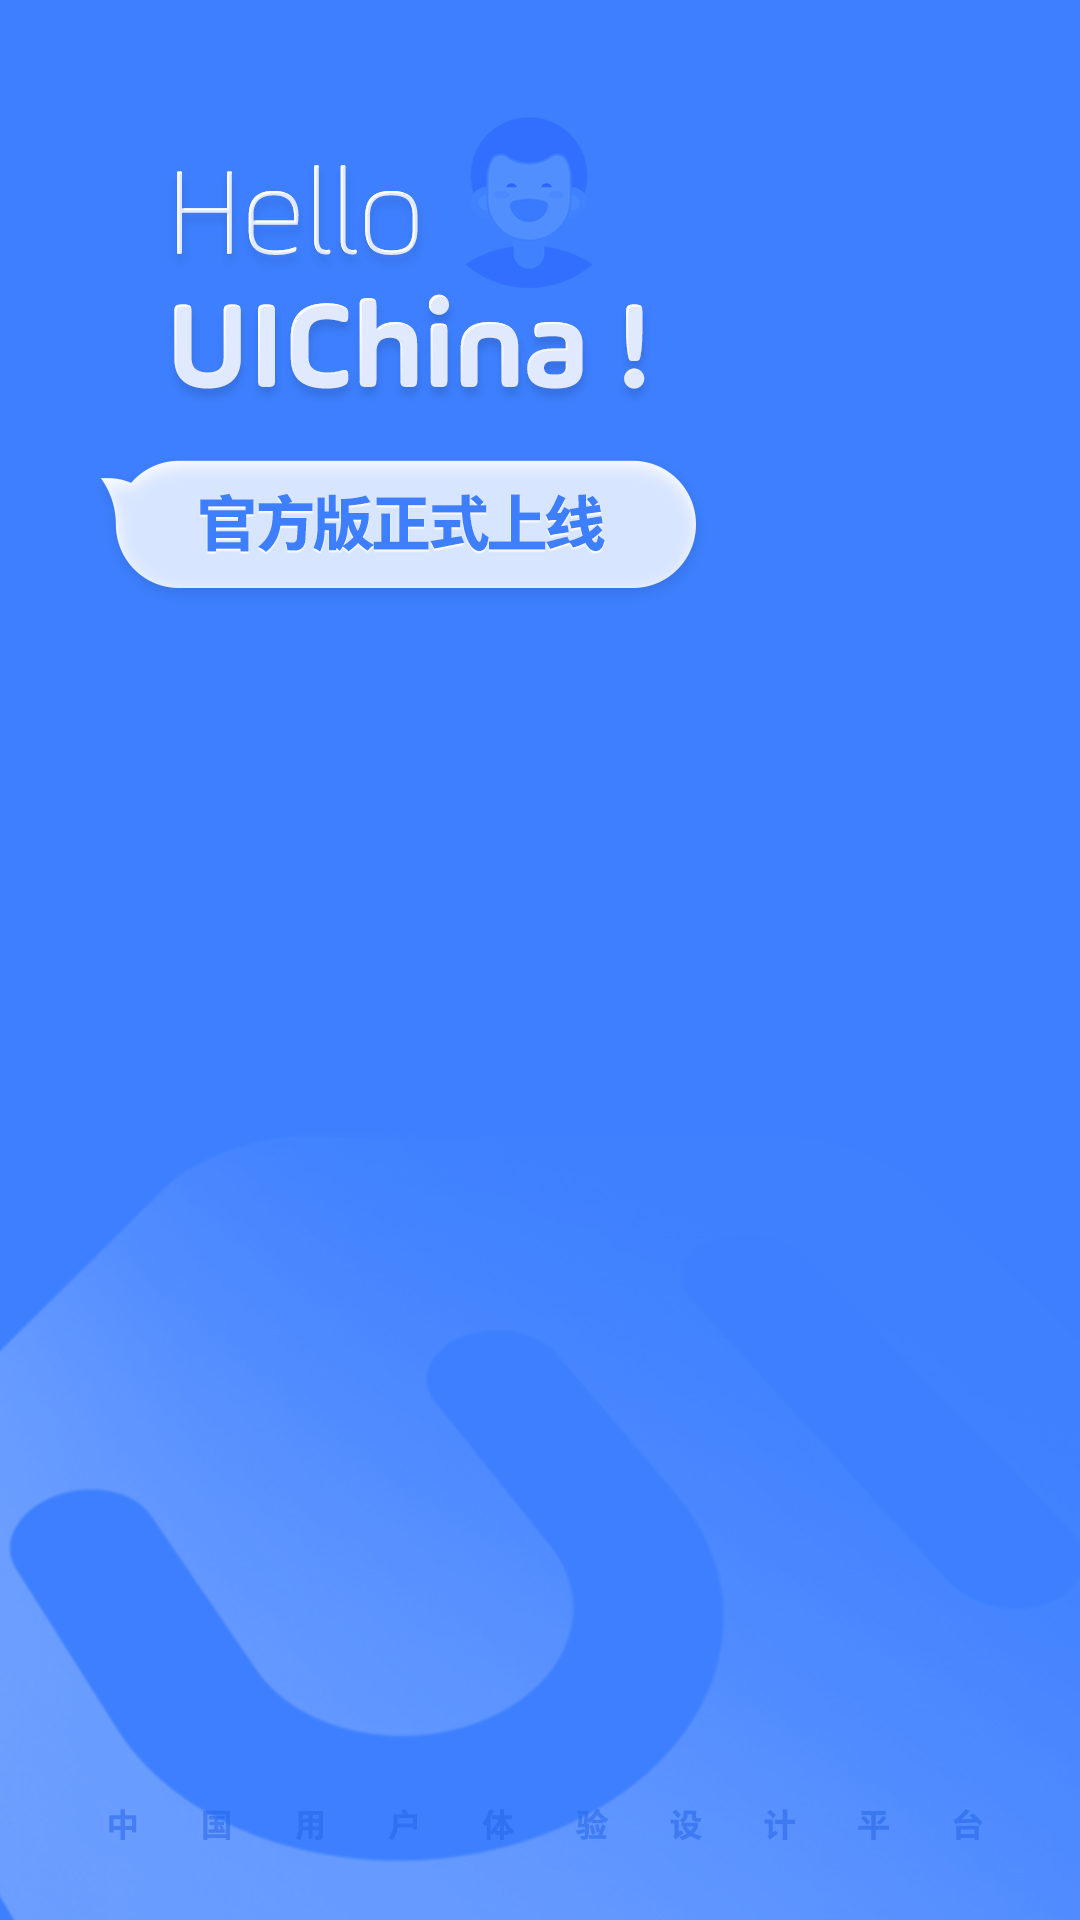 UI中国设计